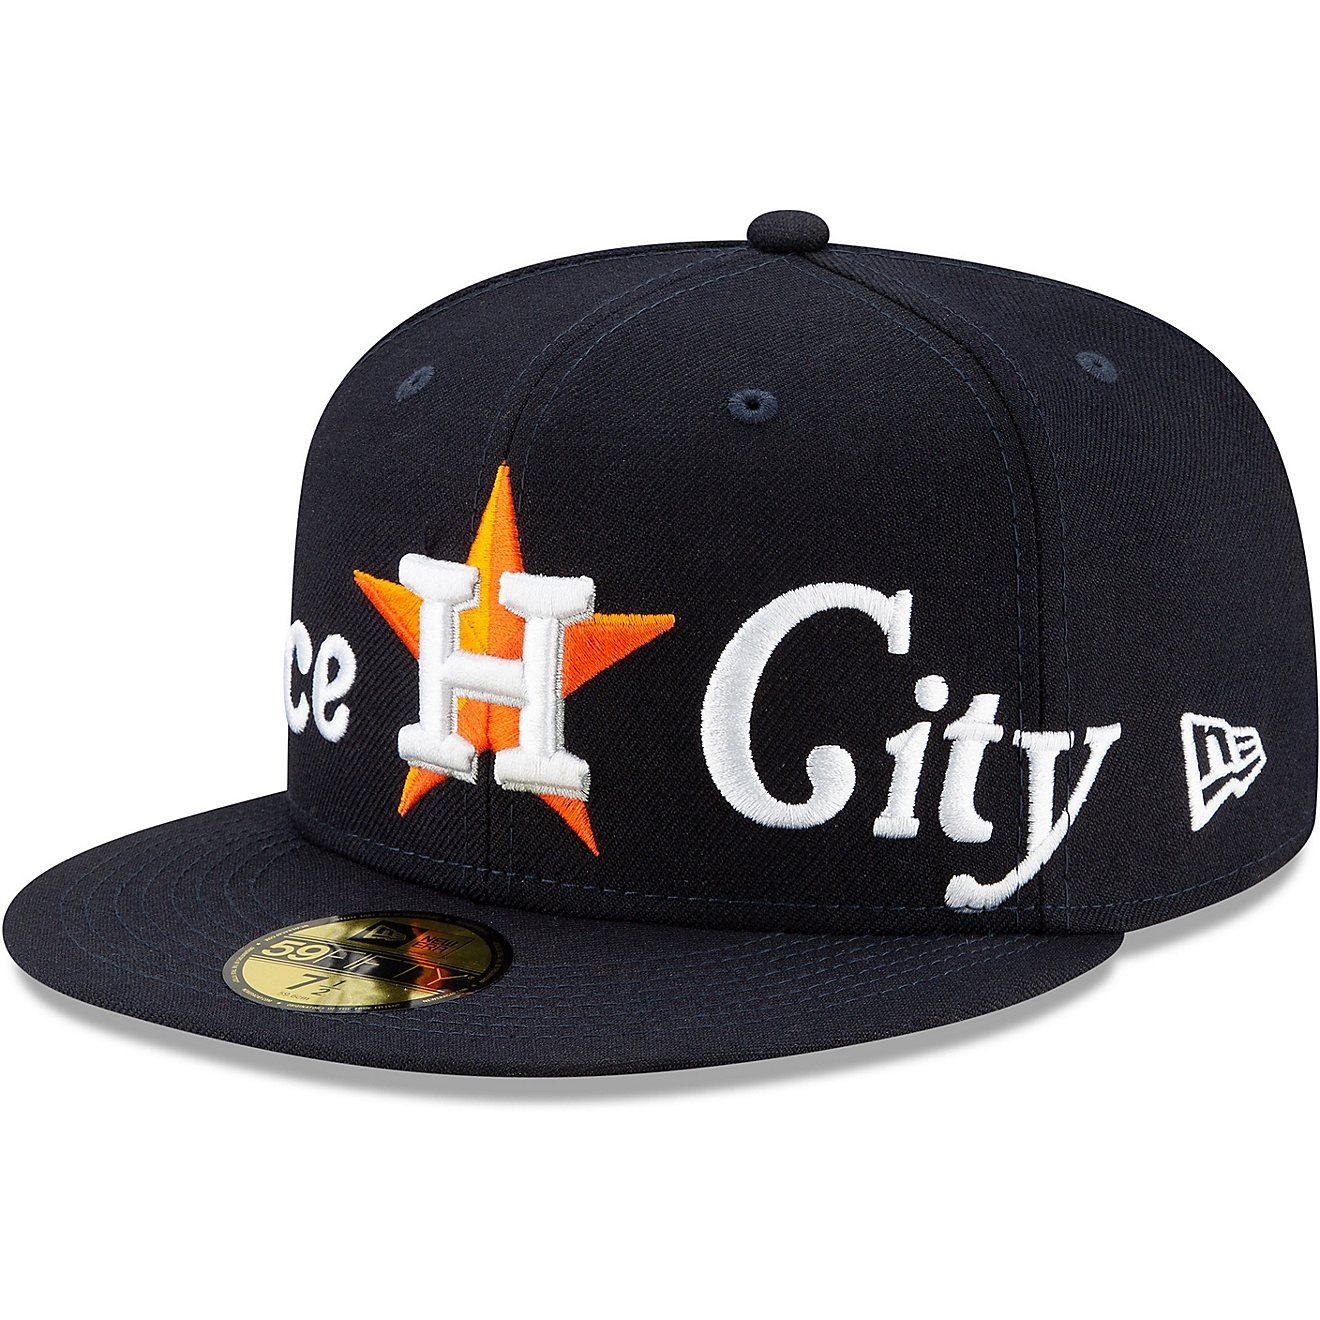 New Era Men's Houston Astros QT City Nickname 59FIFTY Cap                                                                        - view number 1